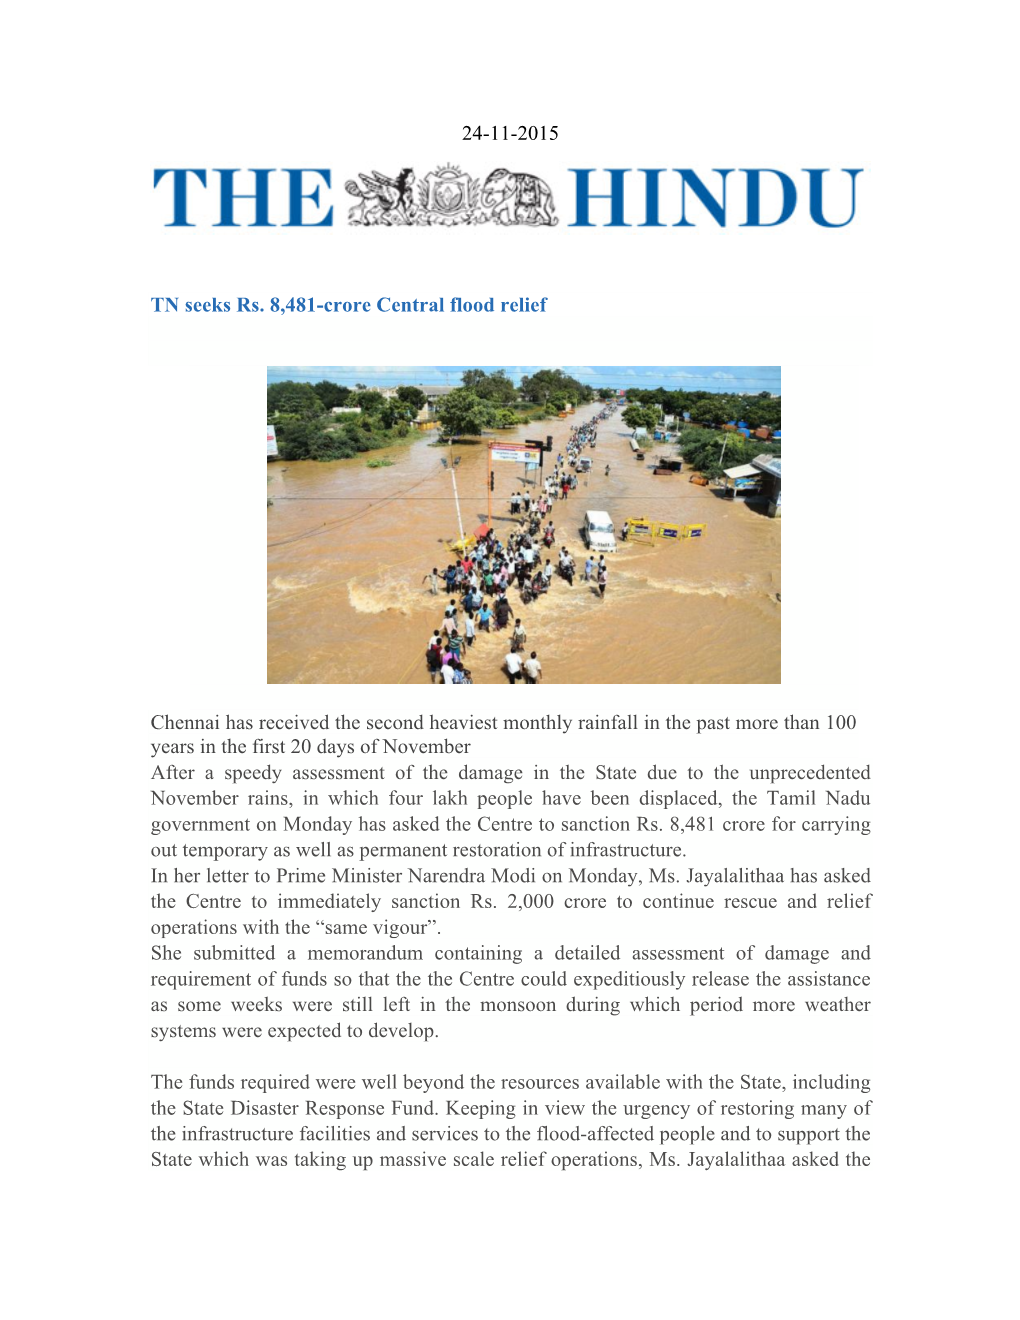 24-11-2015 TN Seeks Rs. 8,481-Crore Central Flood Relief Chennai Has